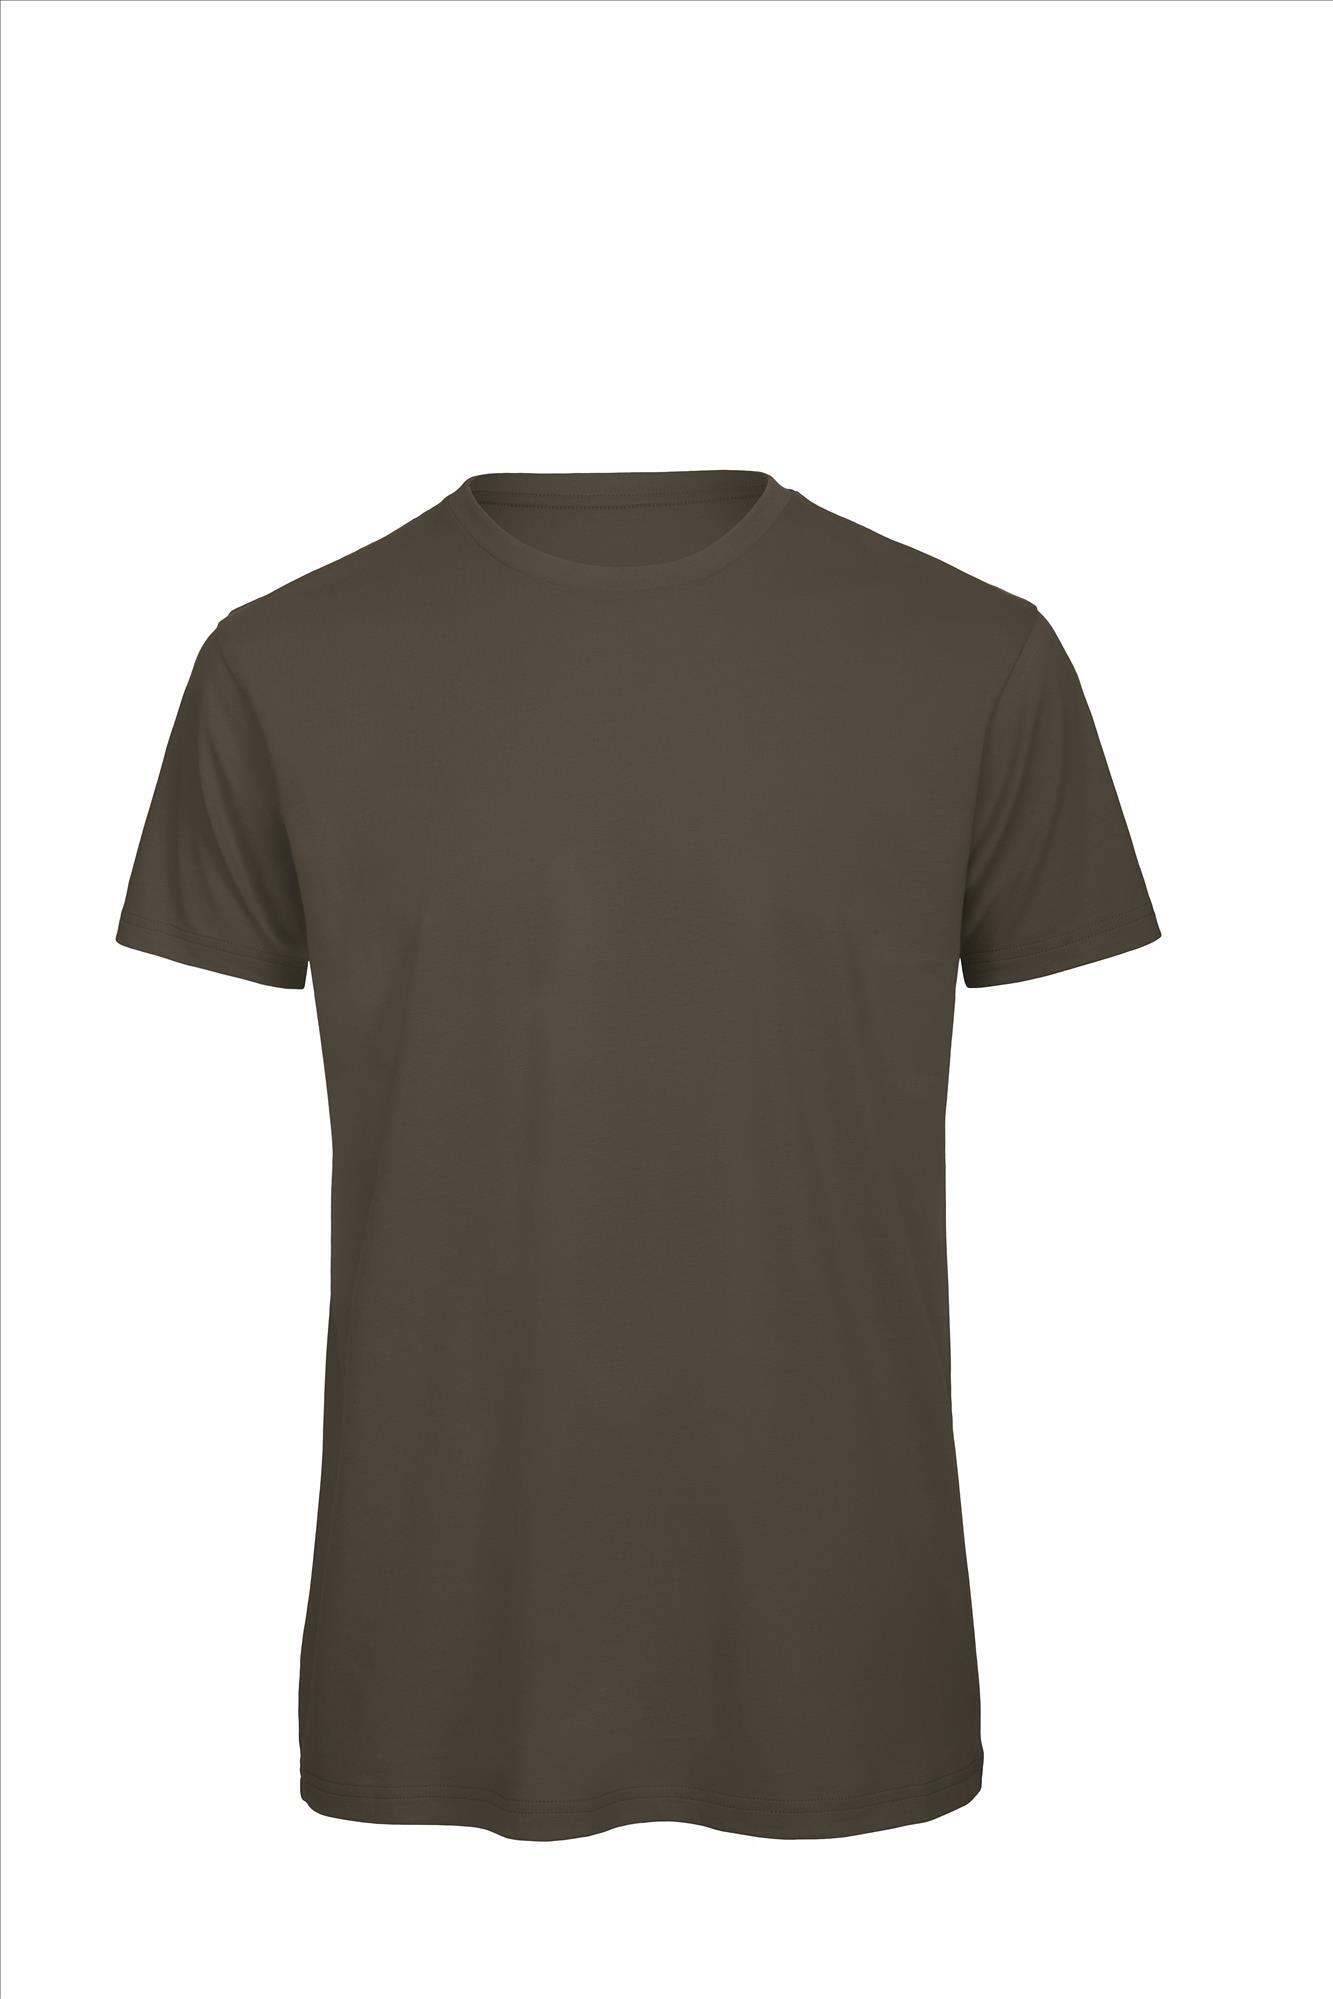 Heren T-shirt khaki te personaliseren bedrukbaar duurzaam shirt